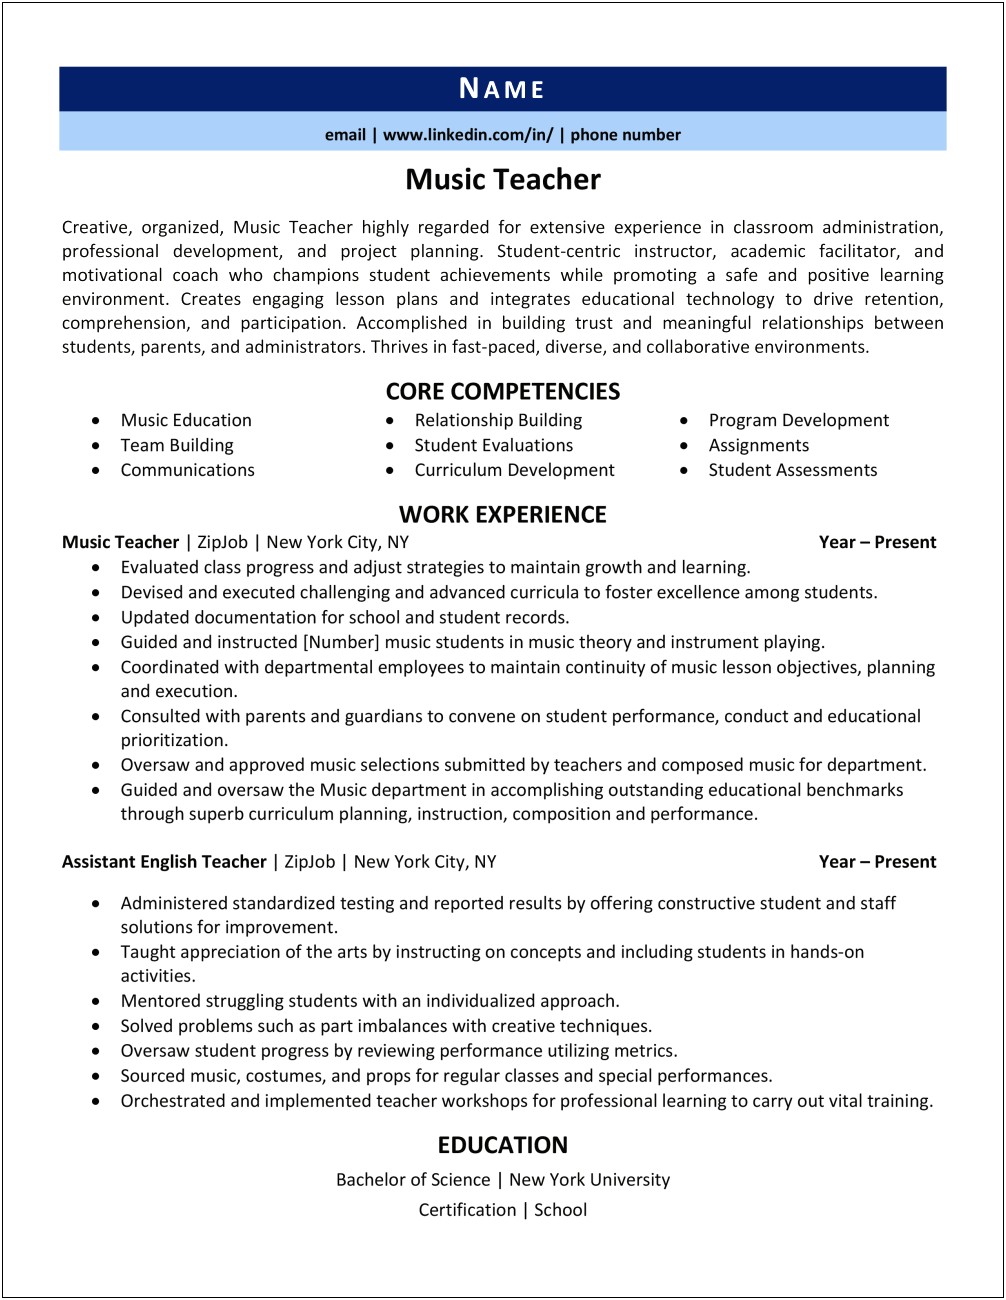 Music Teacher Resume Objective Examples